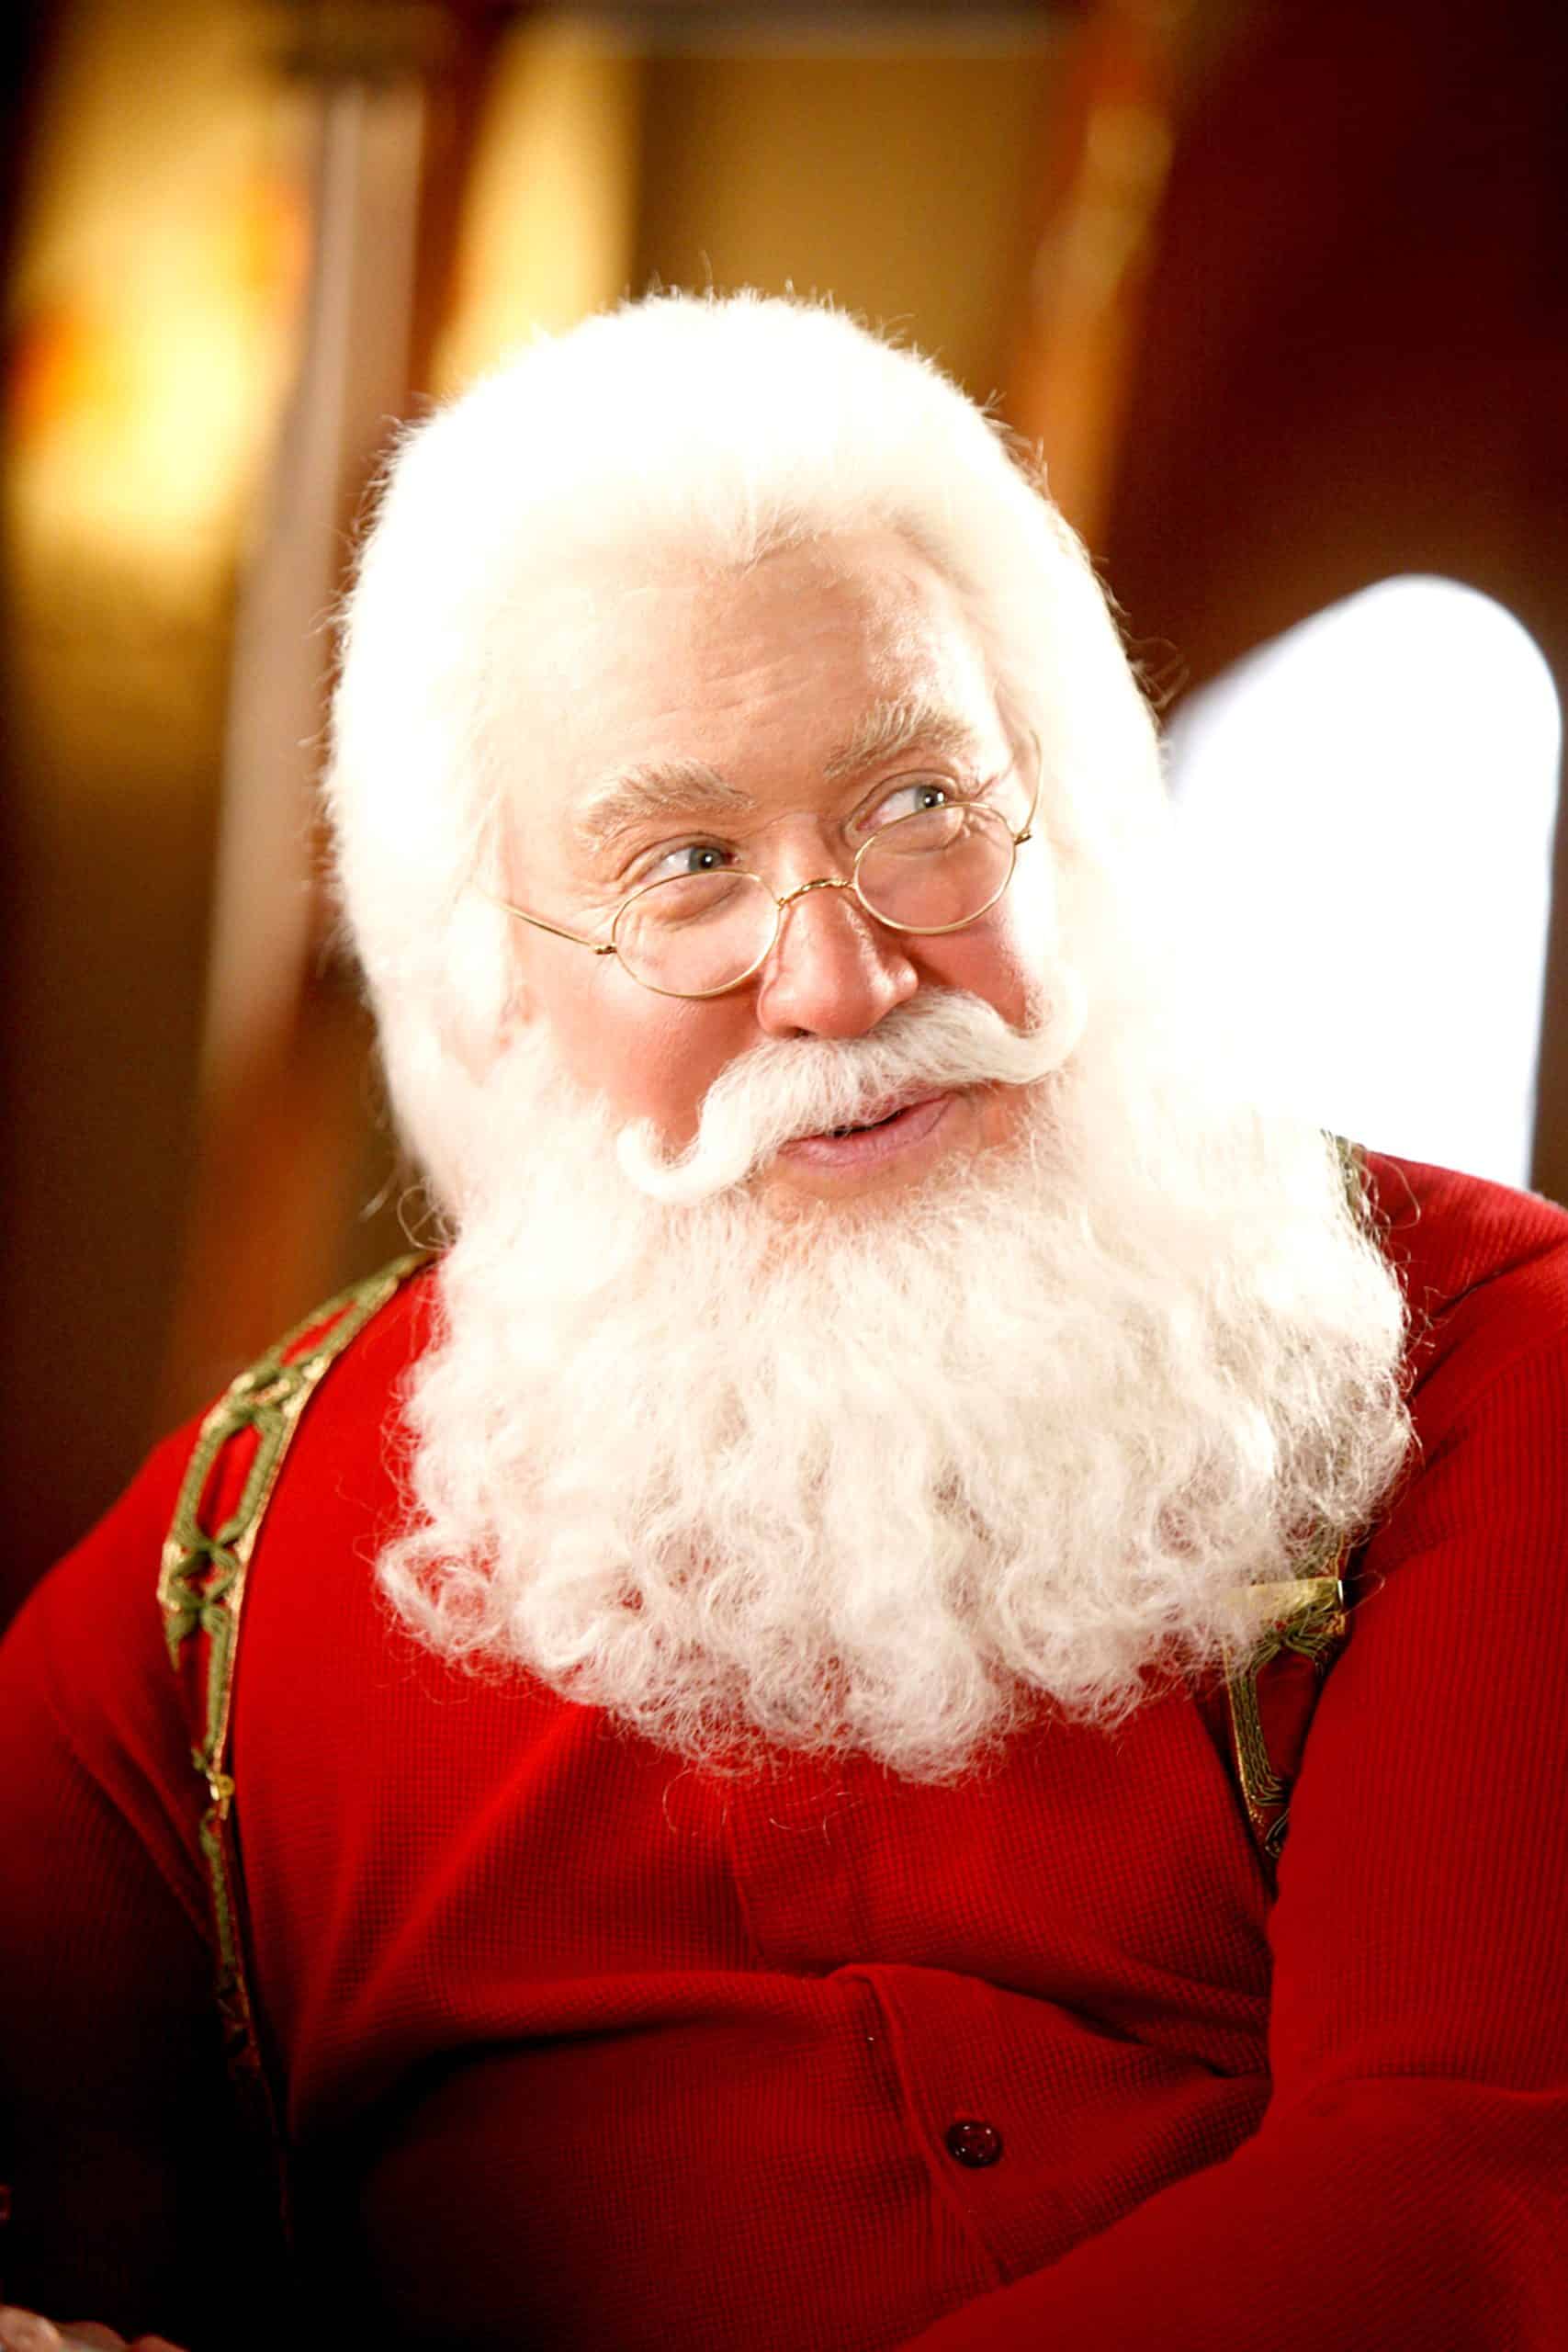 THE SANTA CLAUSE 3: THE ESCAPE CLAUSE, Tim Allen as Santa Claus, 2006